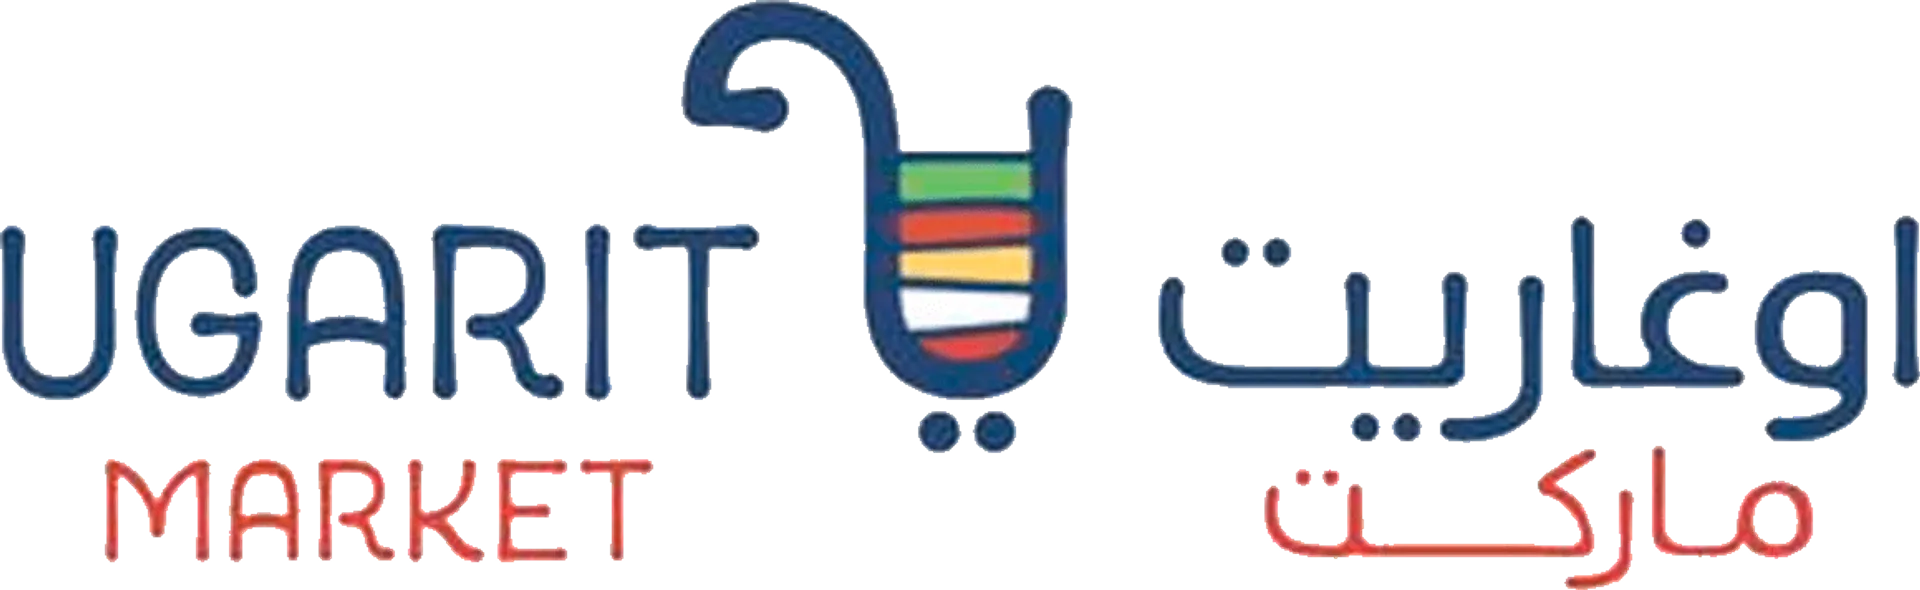 UGARIT MARKET logo